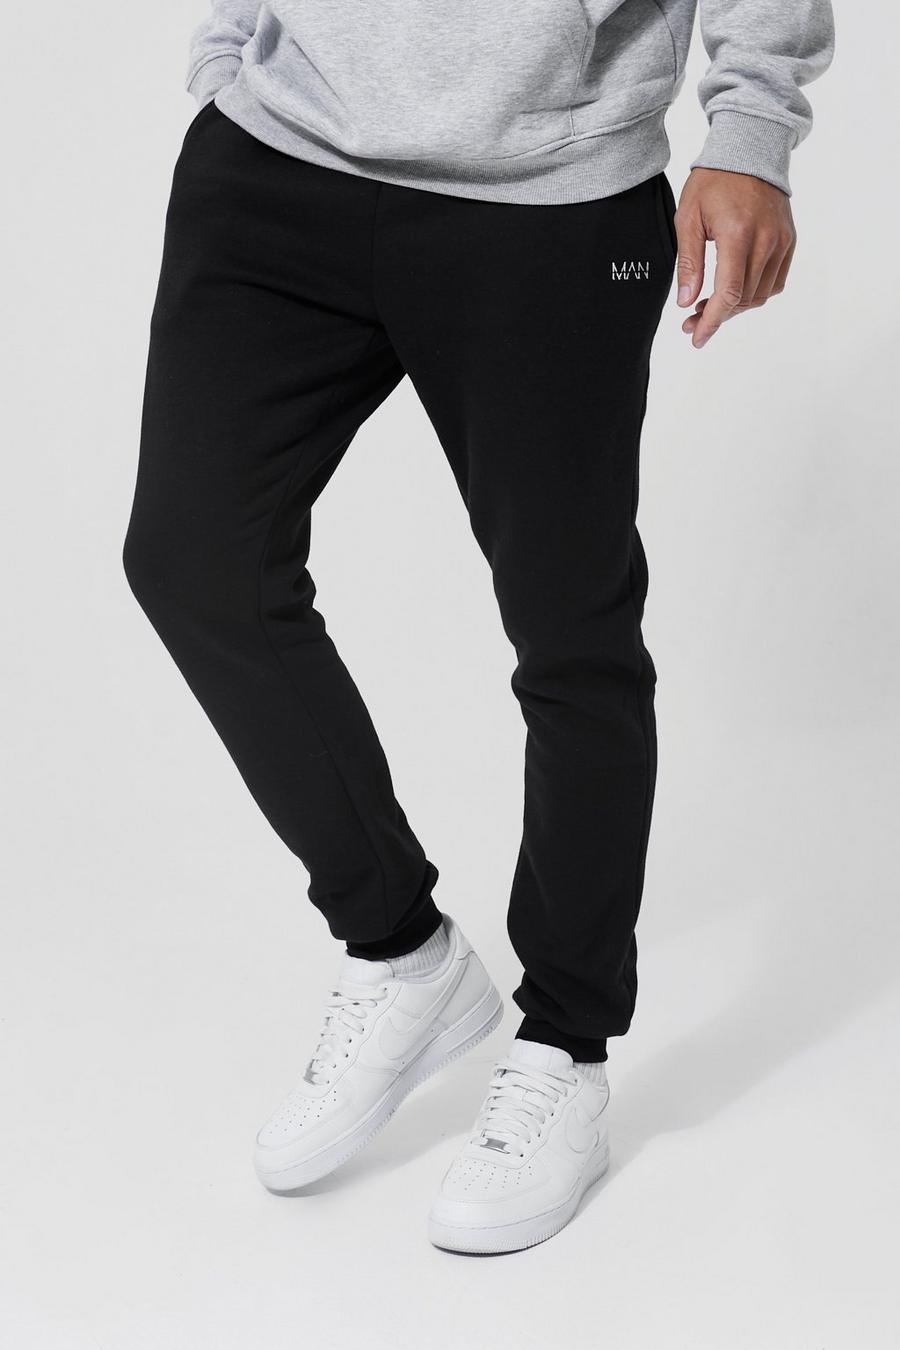 Pantalón deportivo Tall básico pitillo con letras MAN, Black image number 1